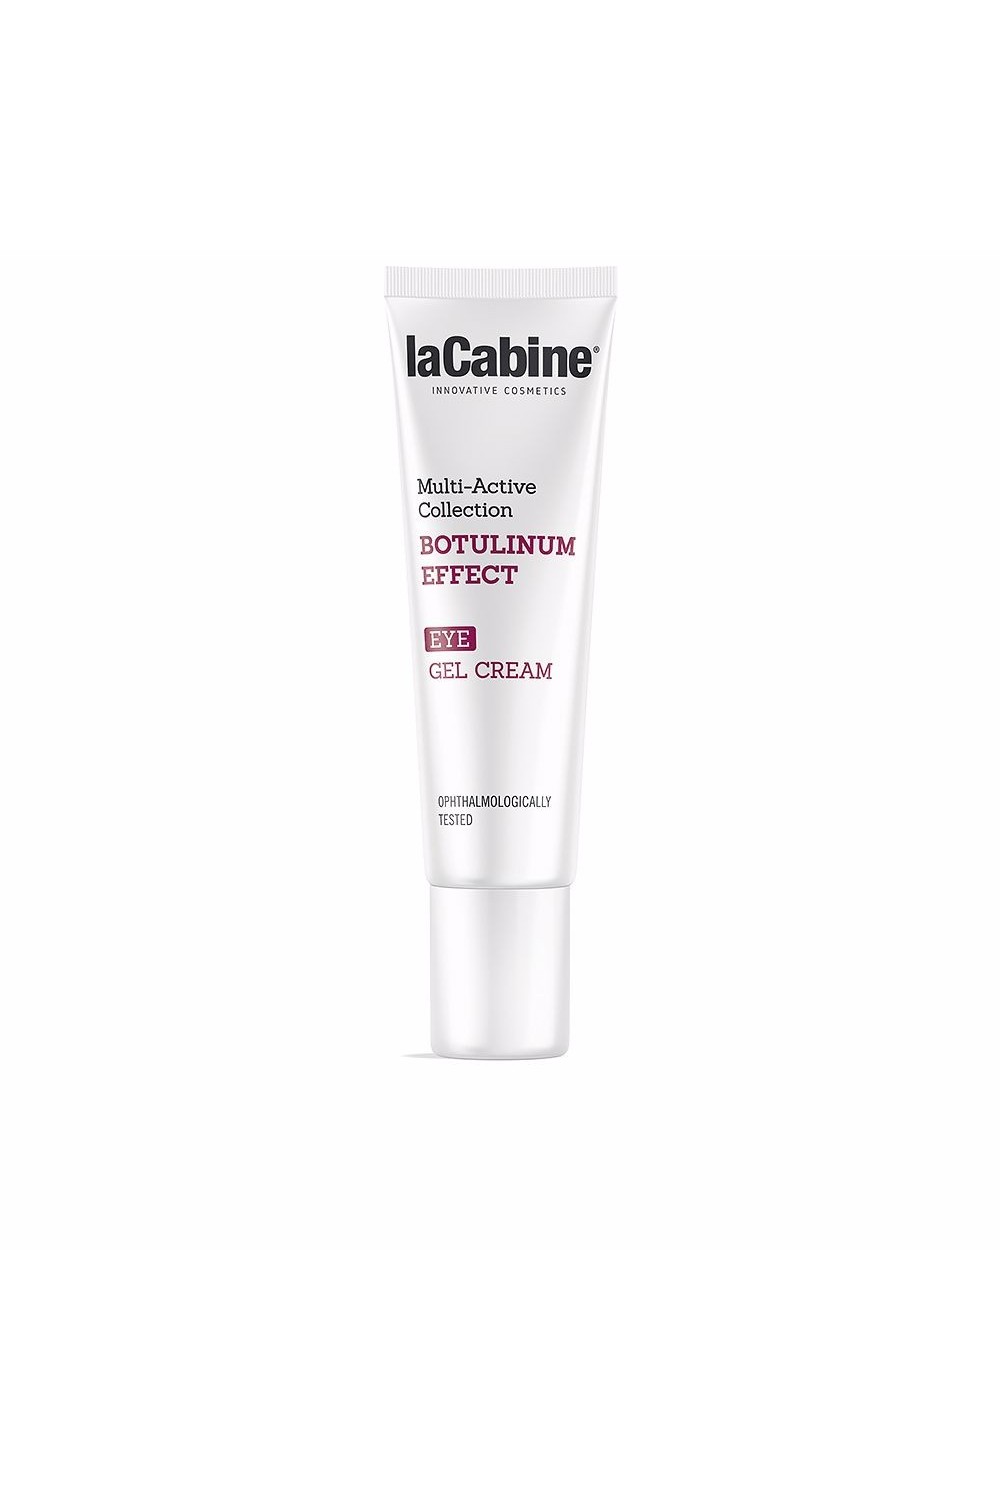 La Cabine Botox-Like Eye Gel Cream 15ml